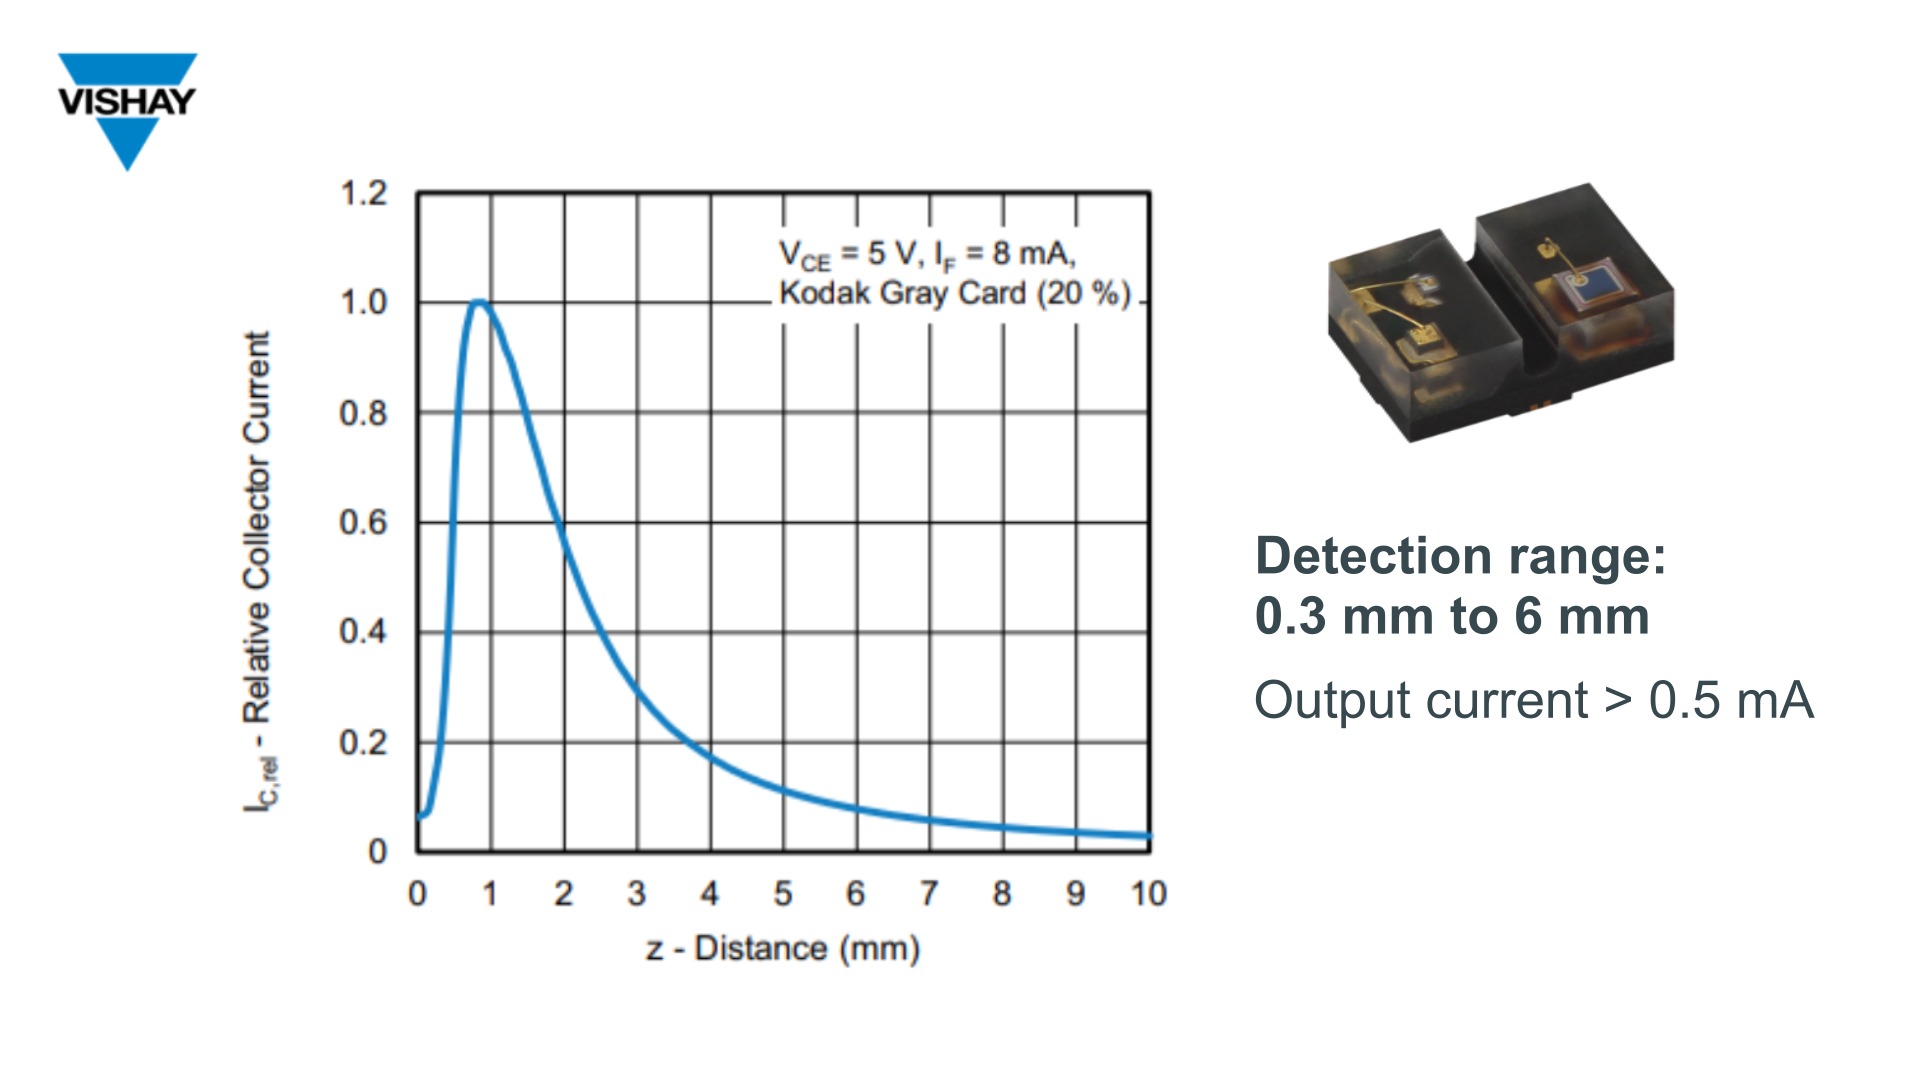 Vishay Opto: VCNT2030 Analog Output Reflective Sensor with VCSEL Emitter